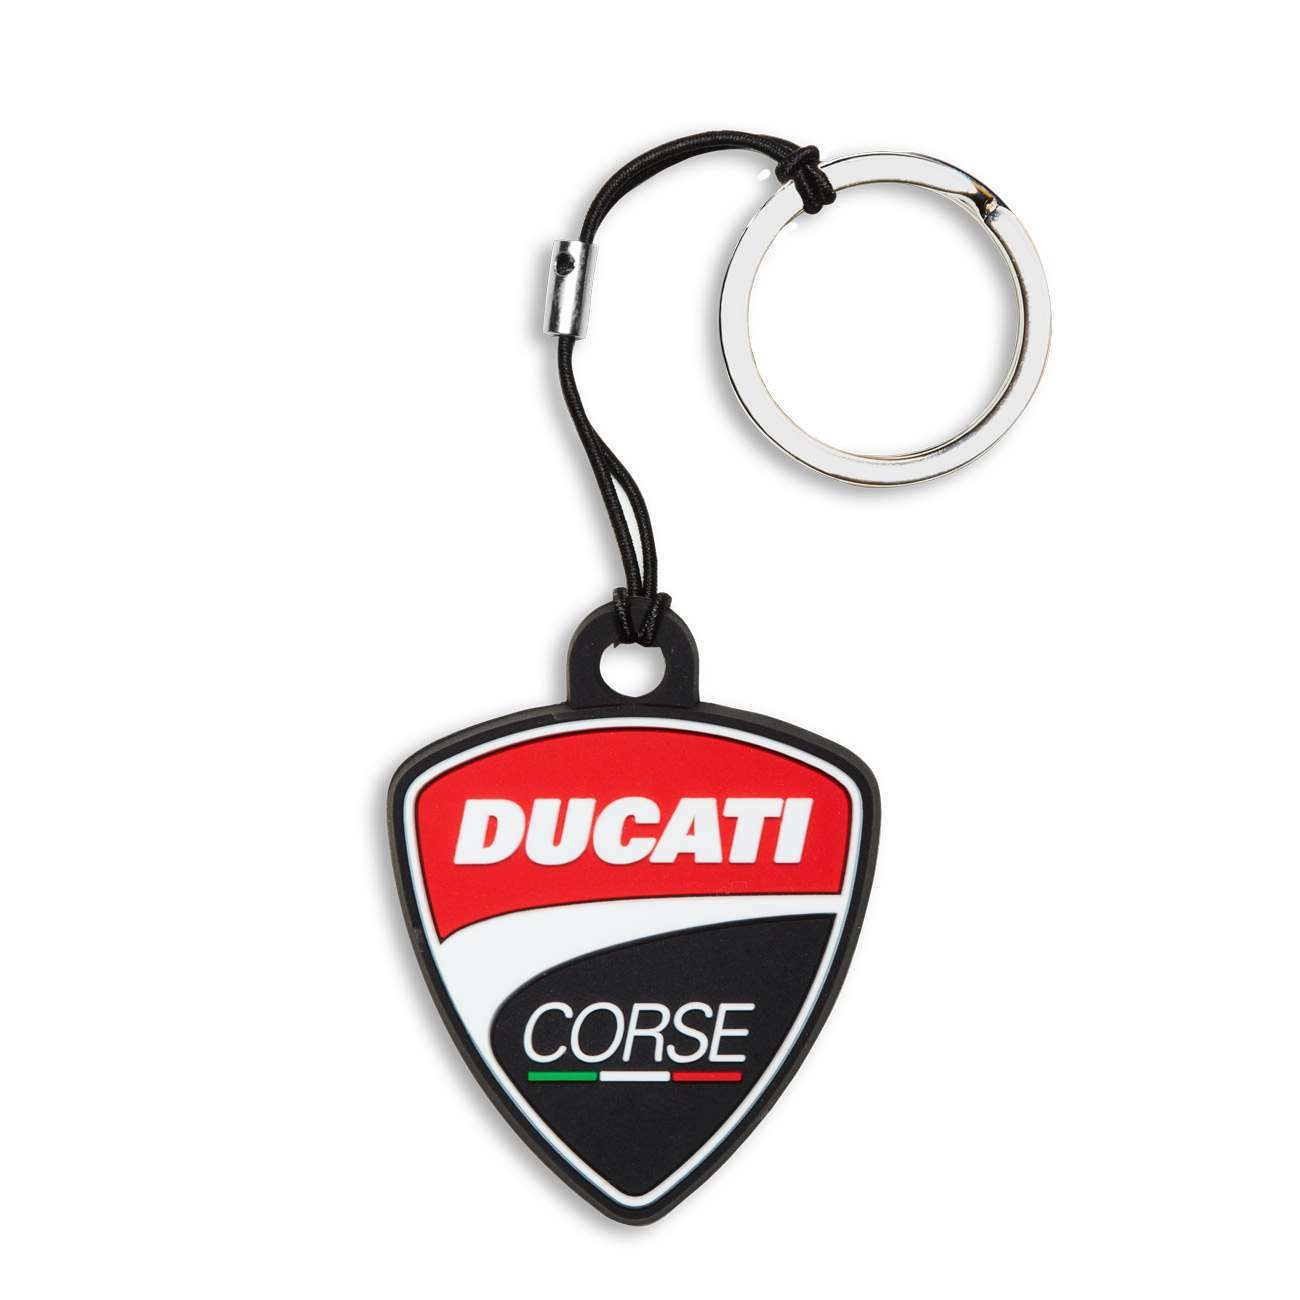 Gummi Schlüsselanhänger-Ducati Corse Shield